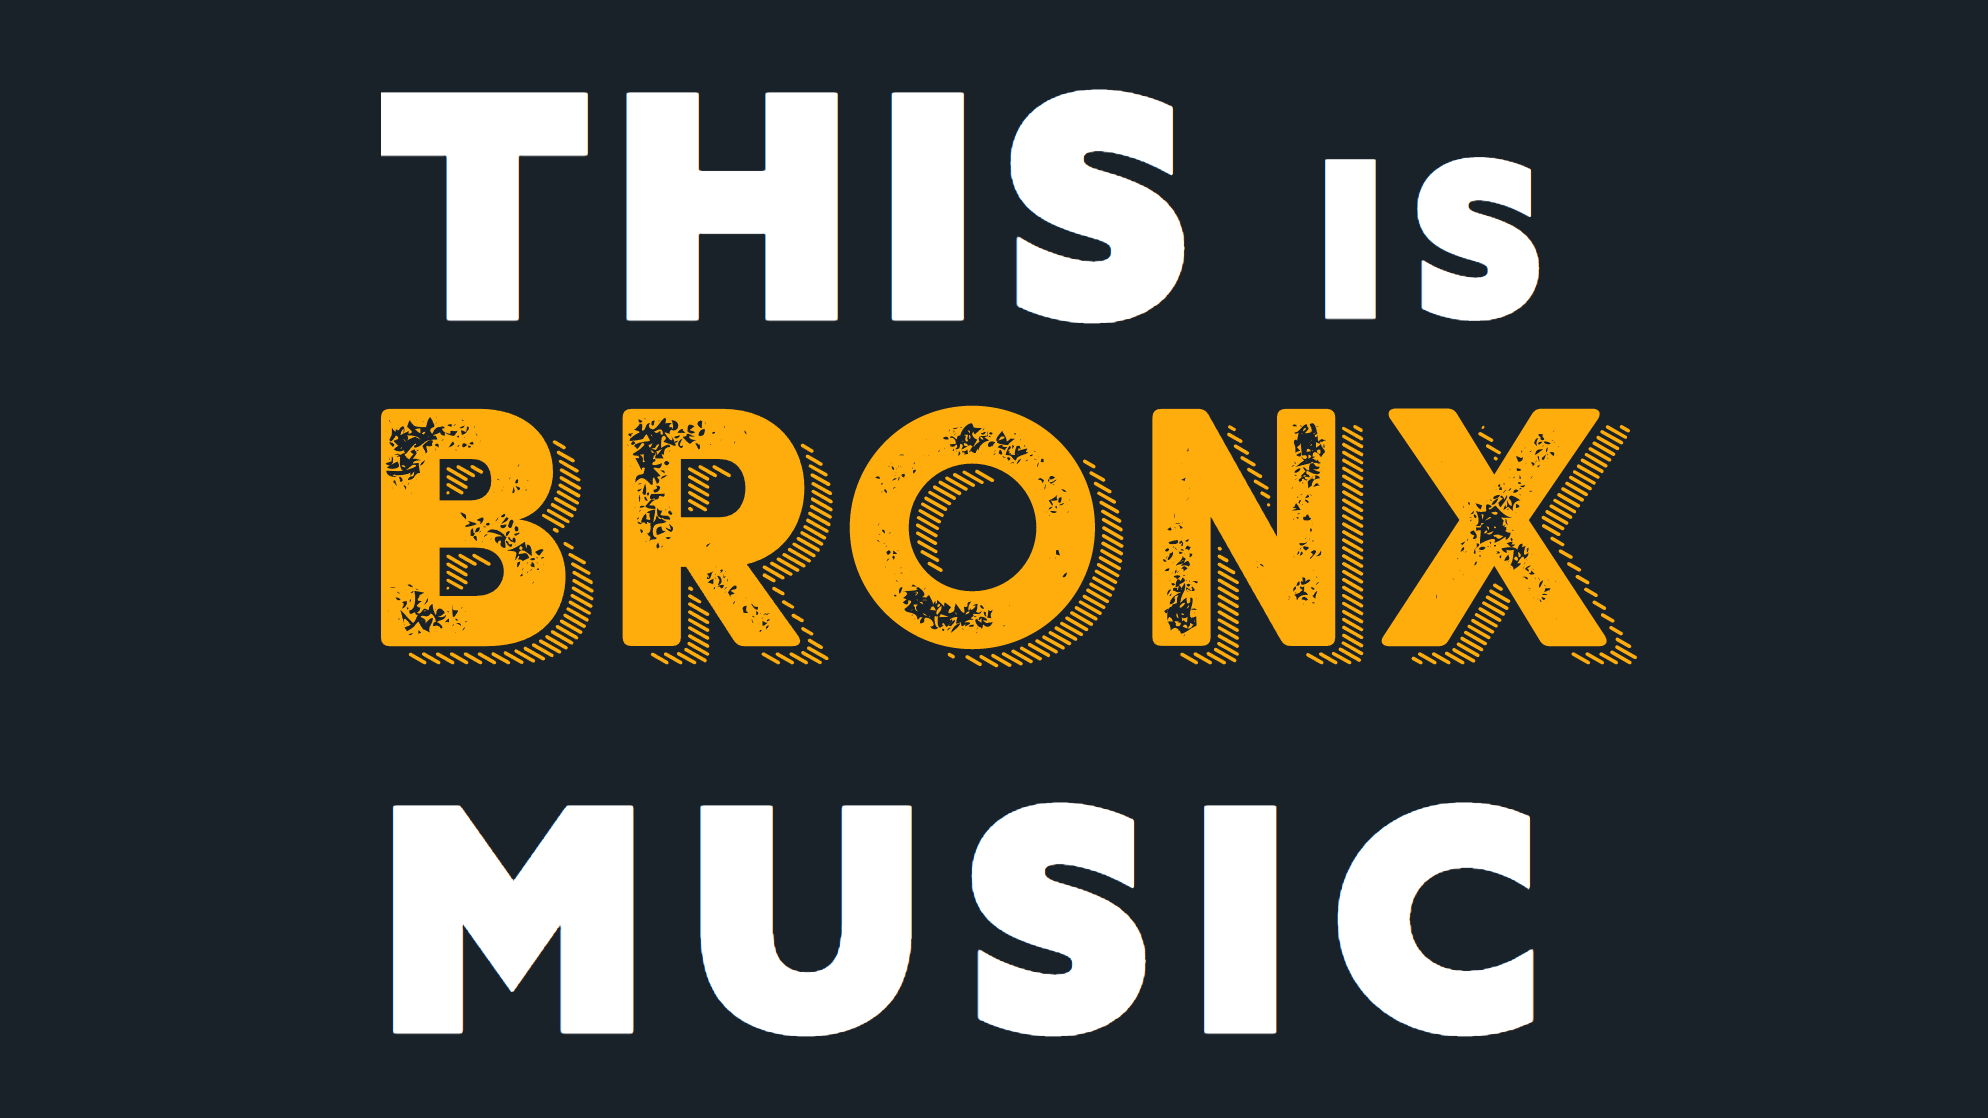 Bronx Music Heritage Center